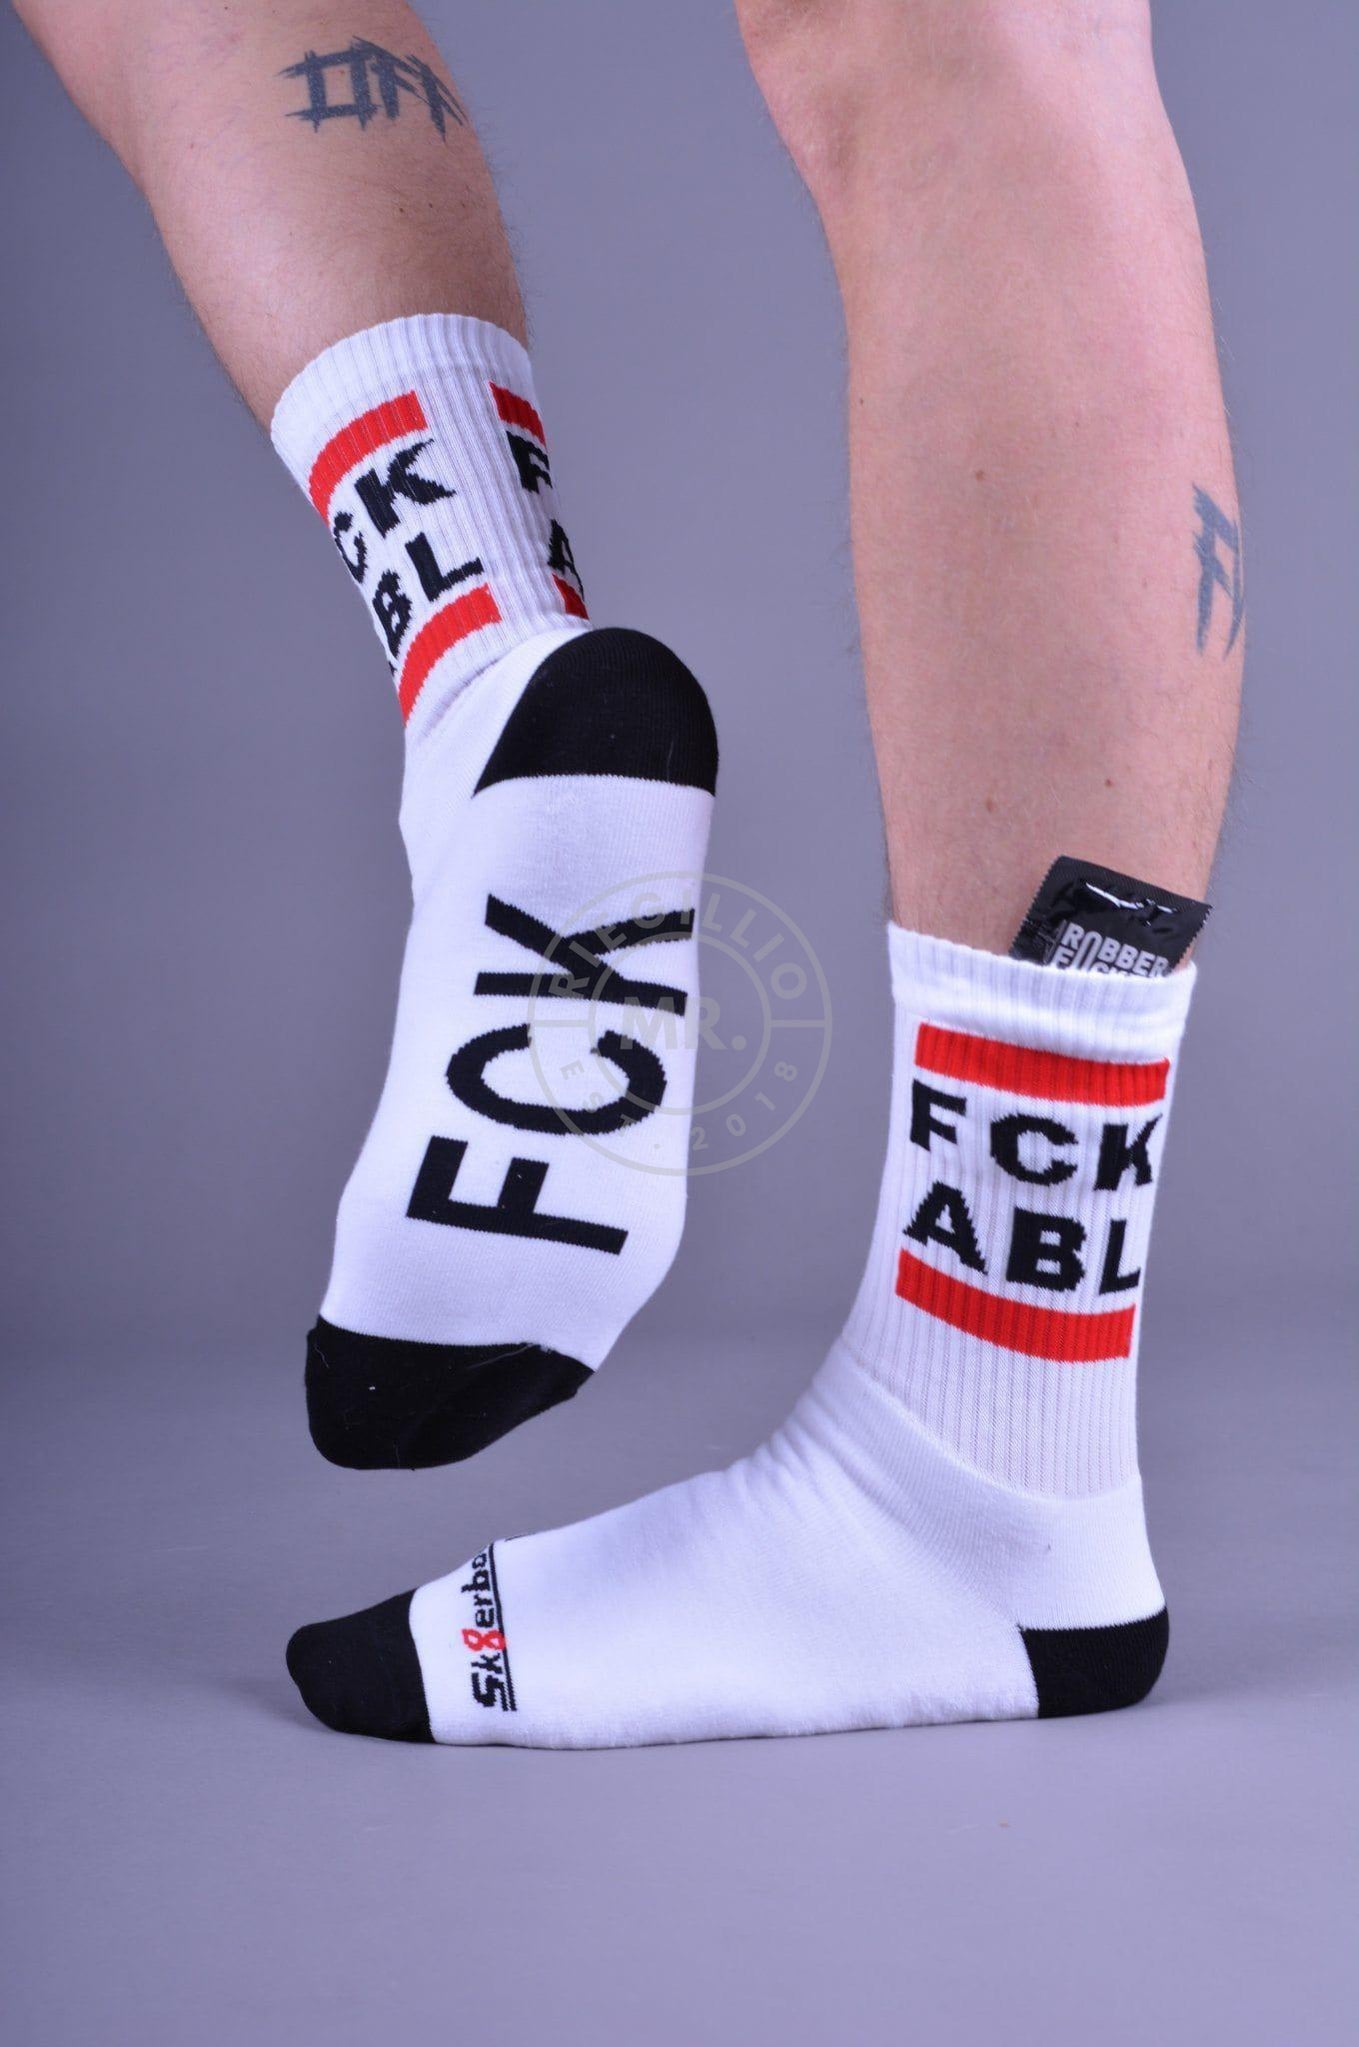 Sk8erboy FCK ABL Socks-at MR. Riegillio